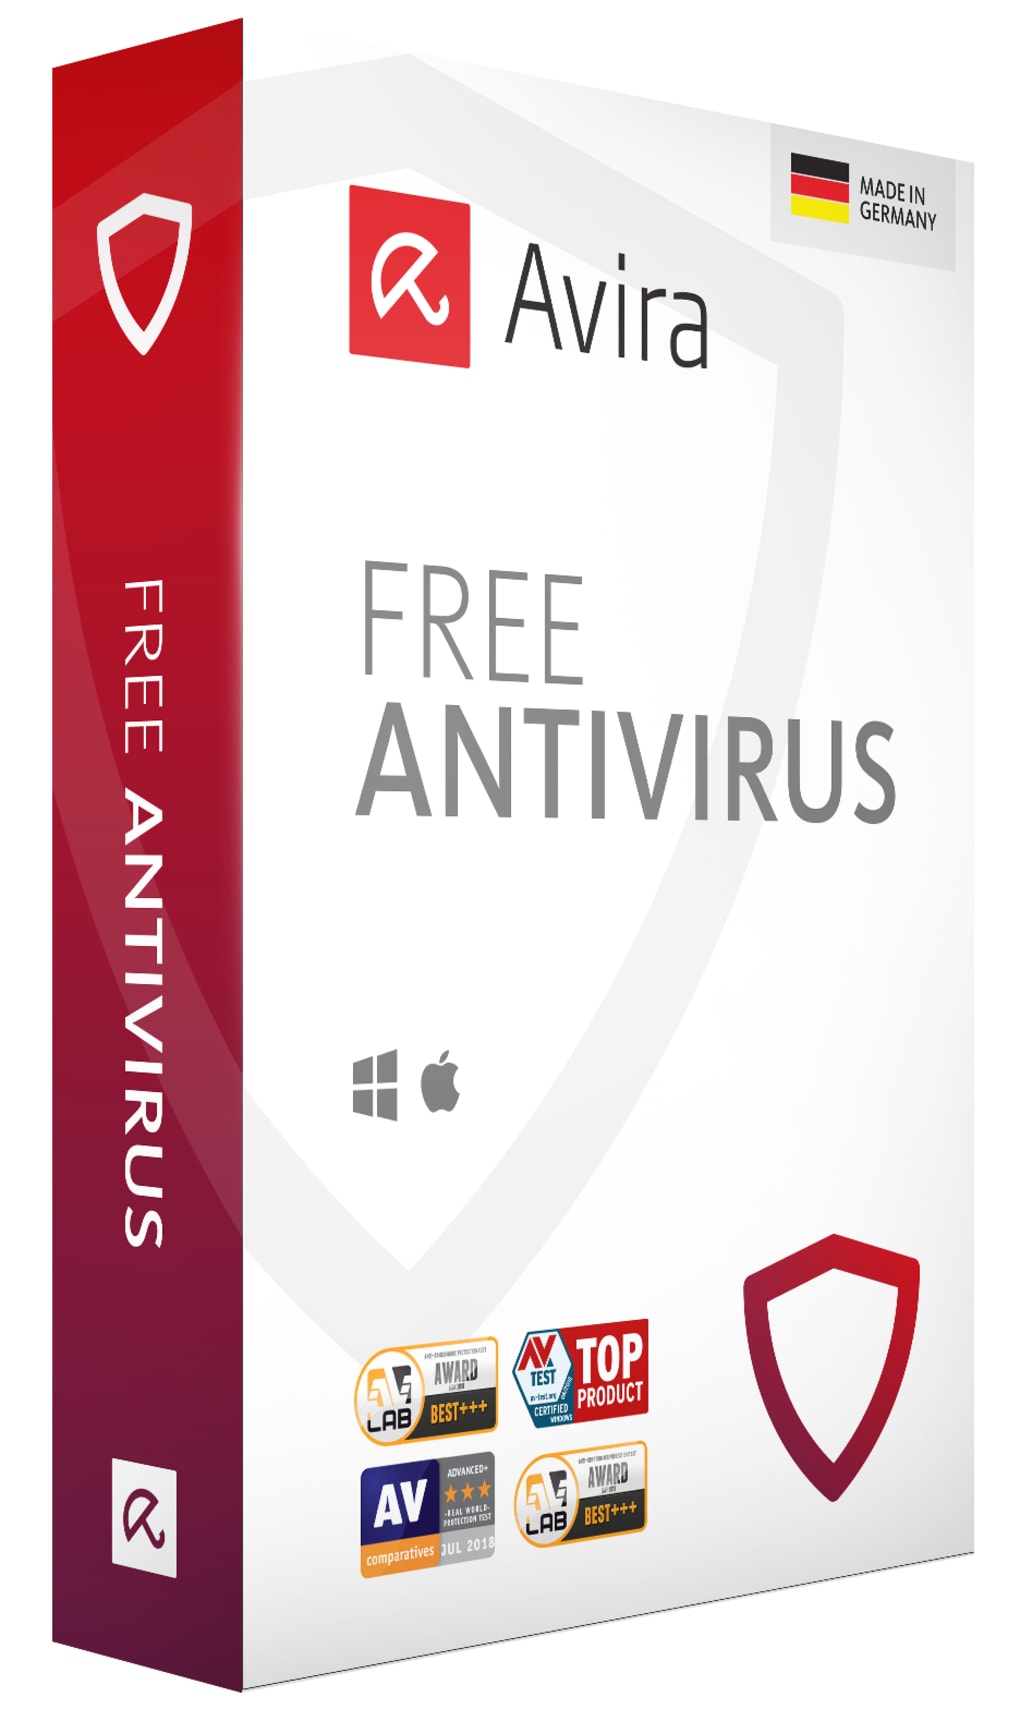 best free antivirus 2018 for tablets